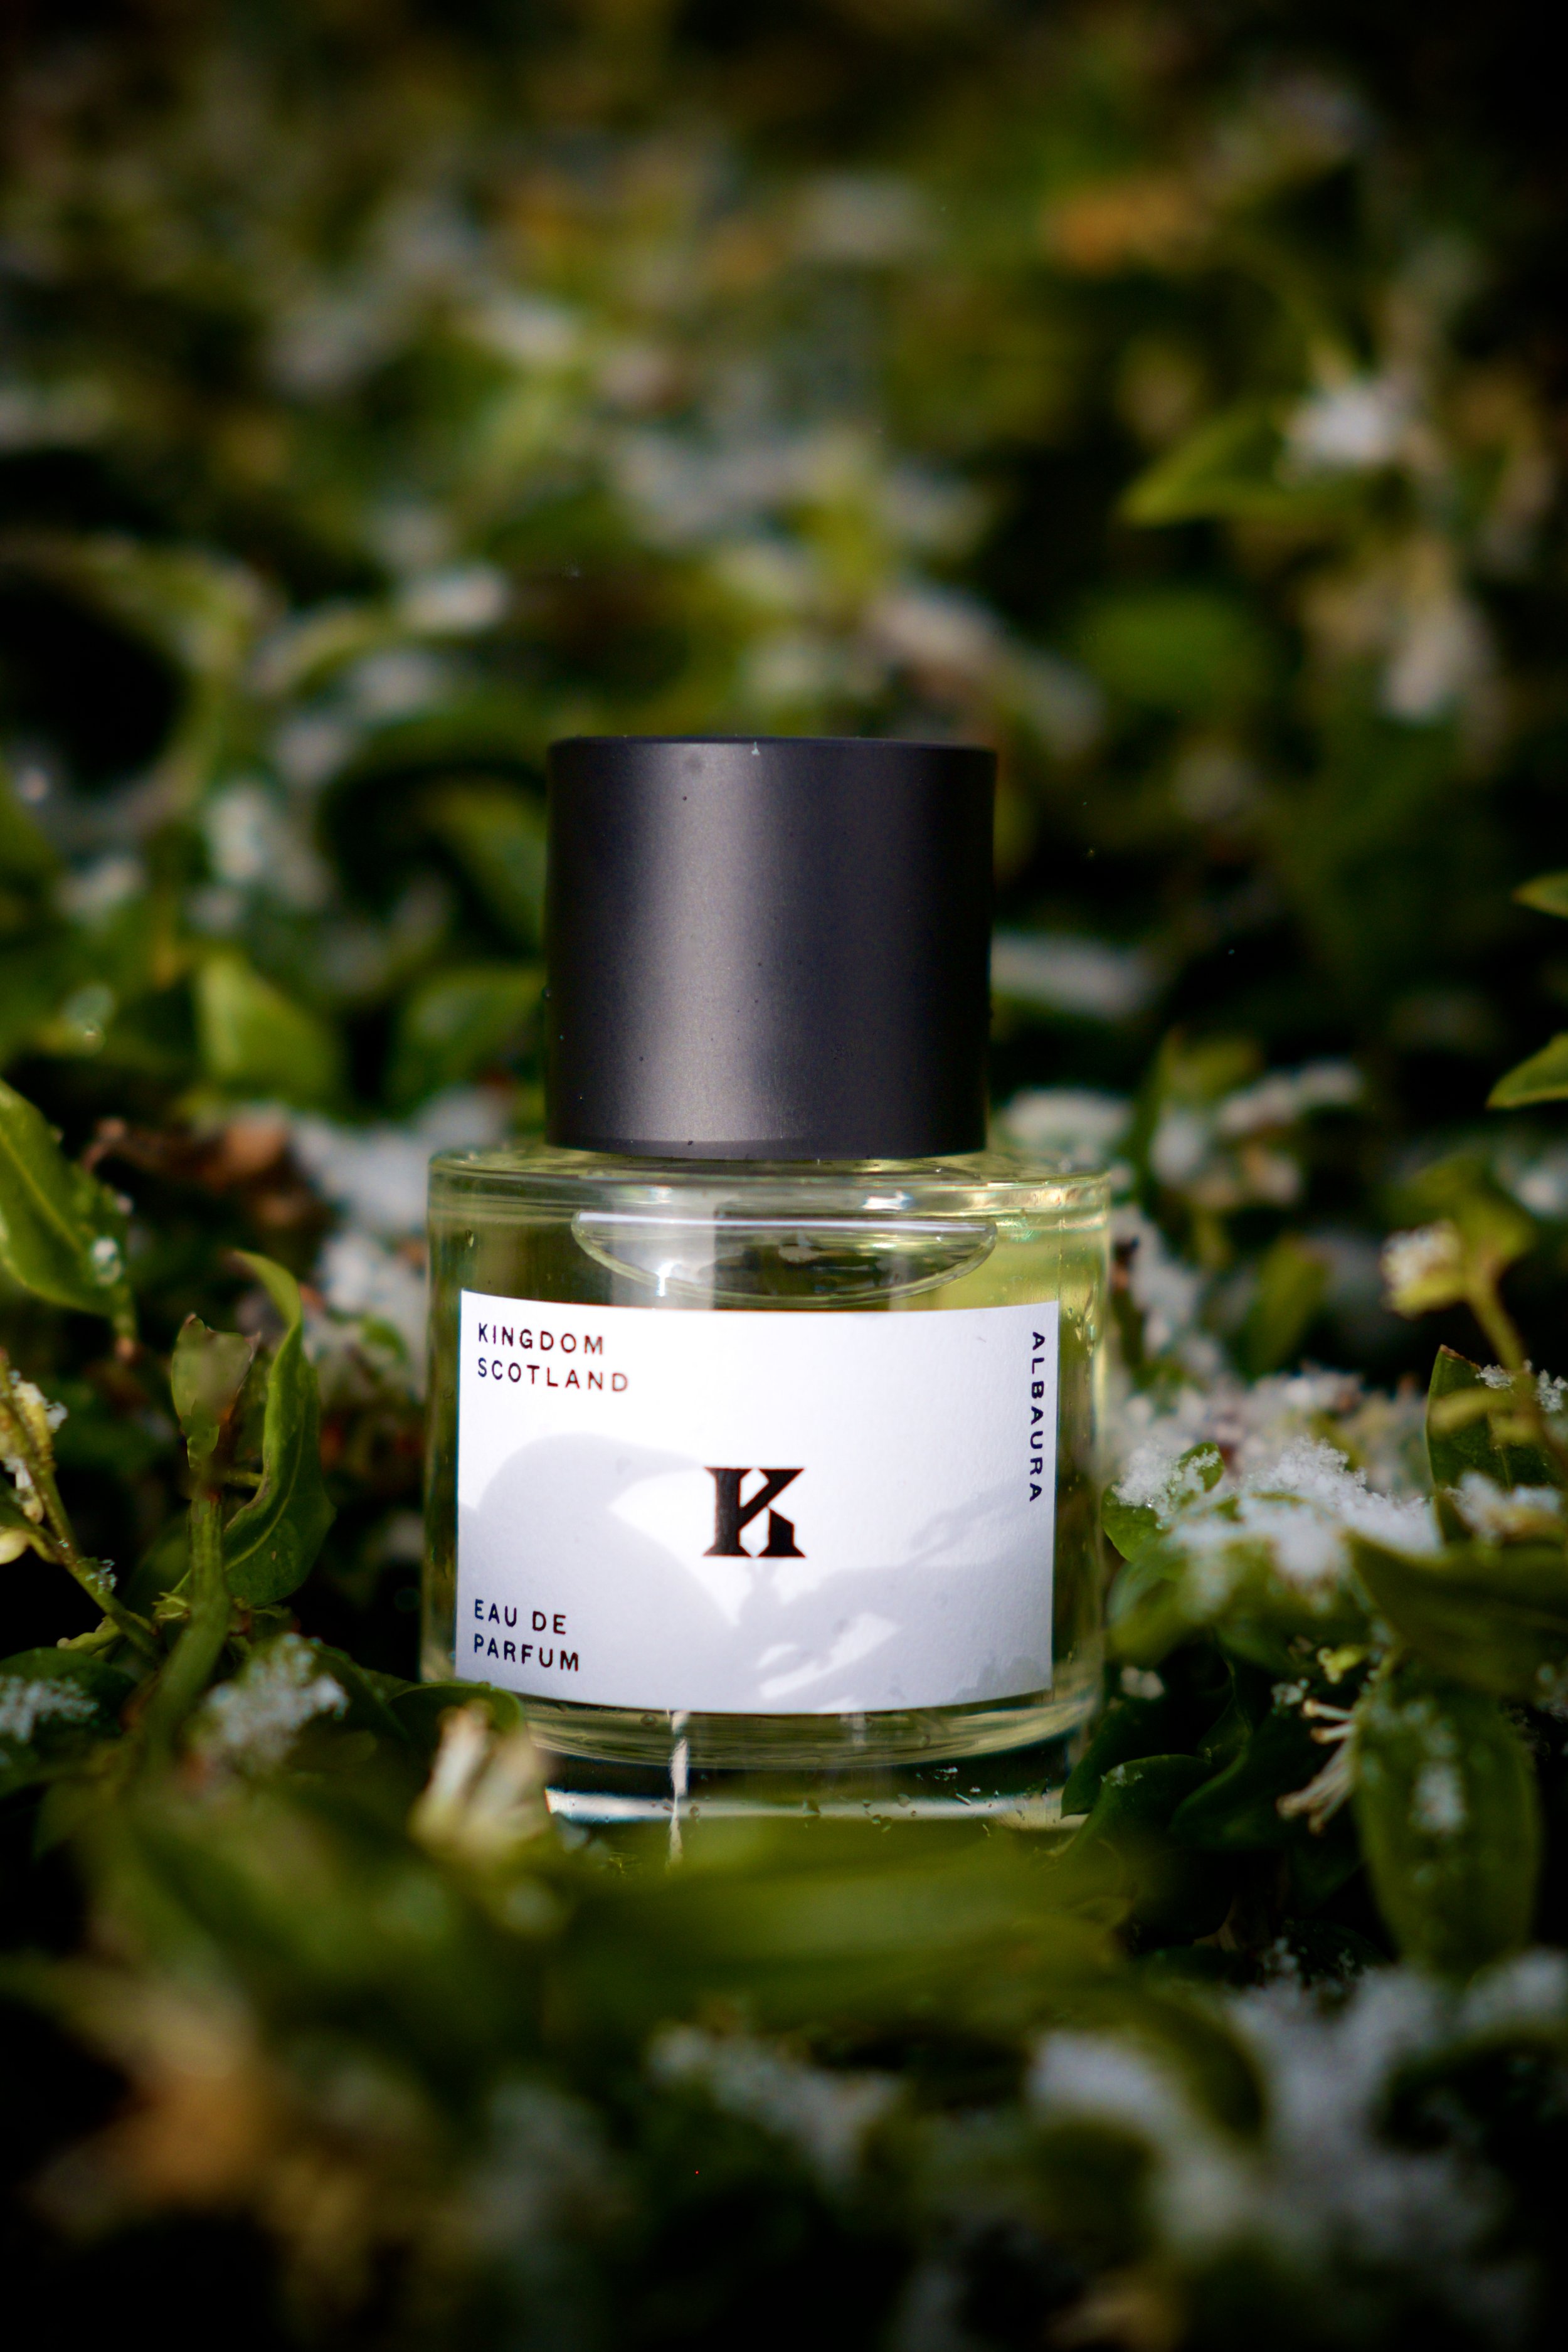 Kingdom Scotland Albaura perfume — Kingdom Scotland